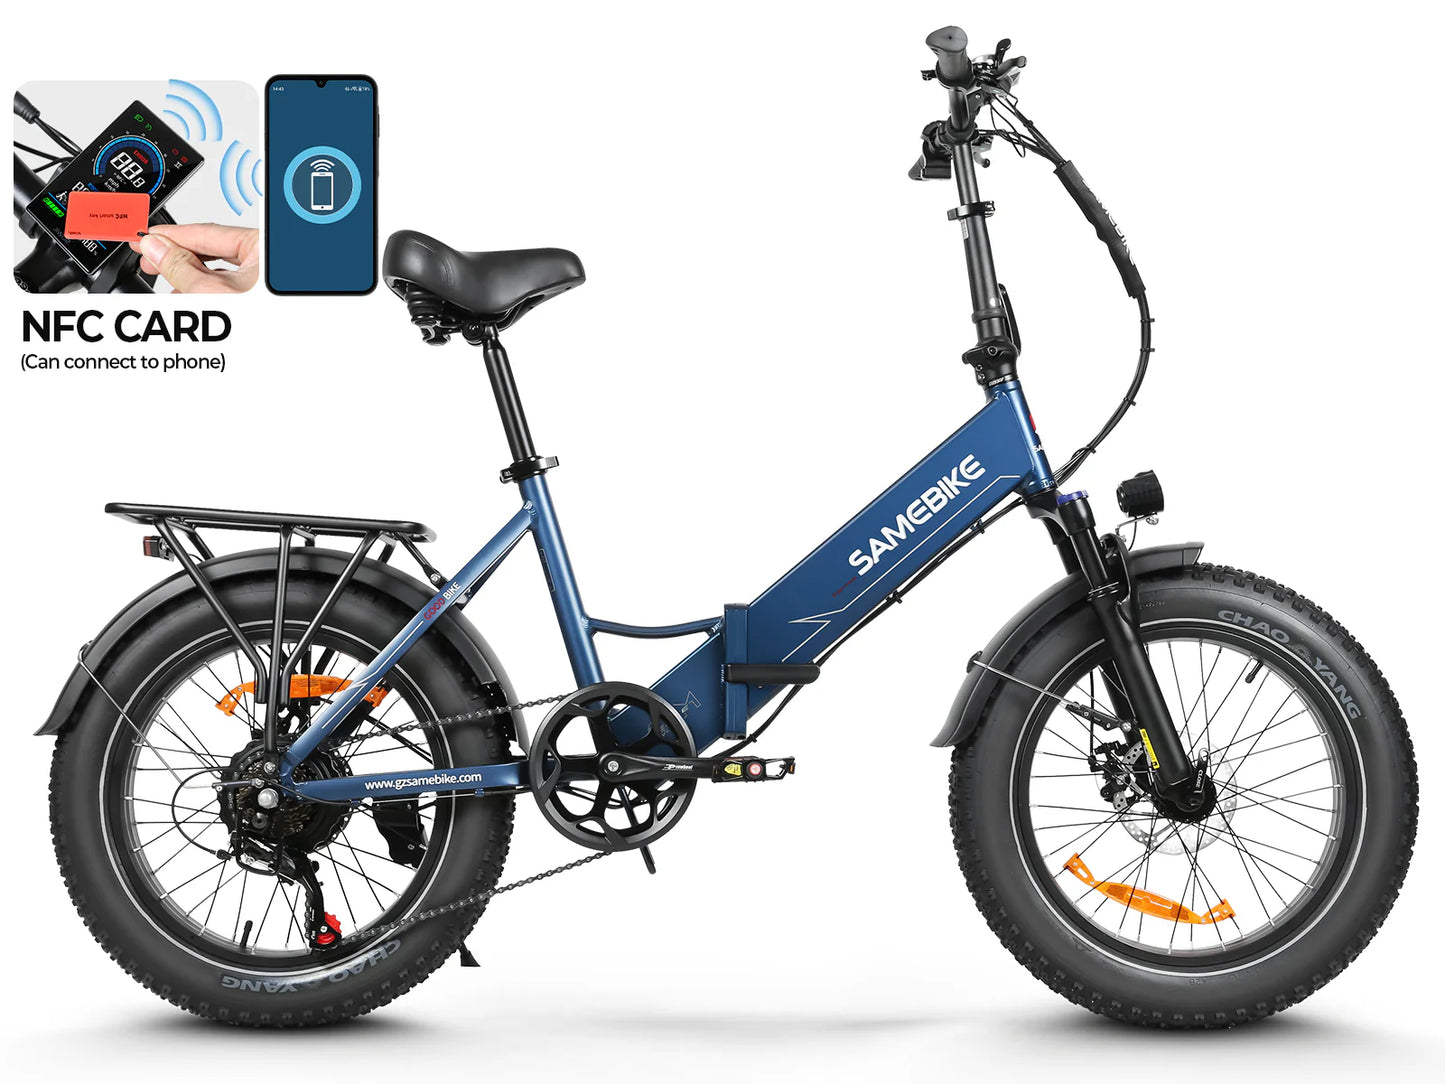 Samebike LOTDM200-II 750W Step-through Folding Electric Bike